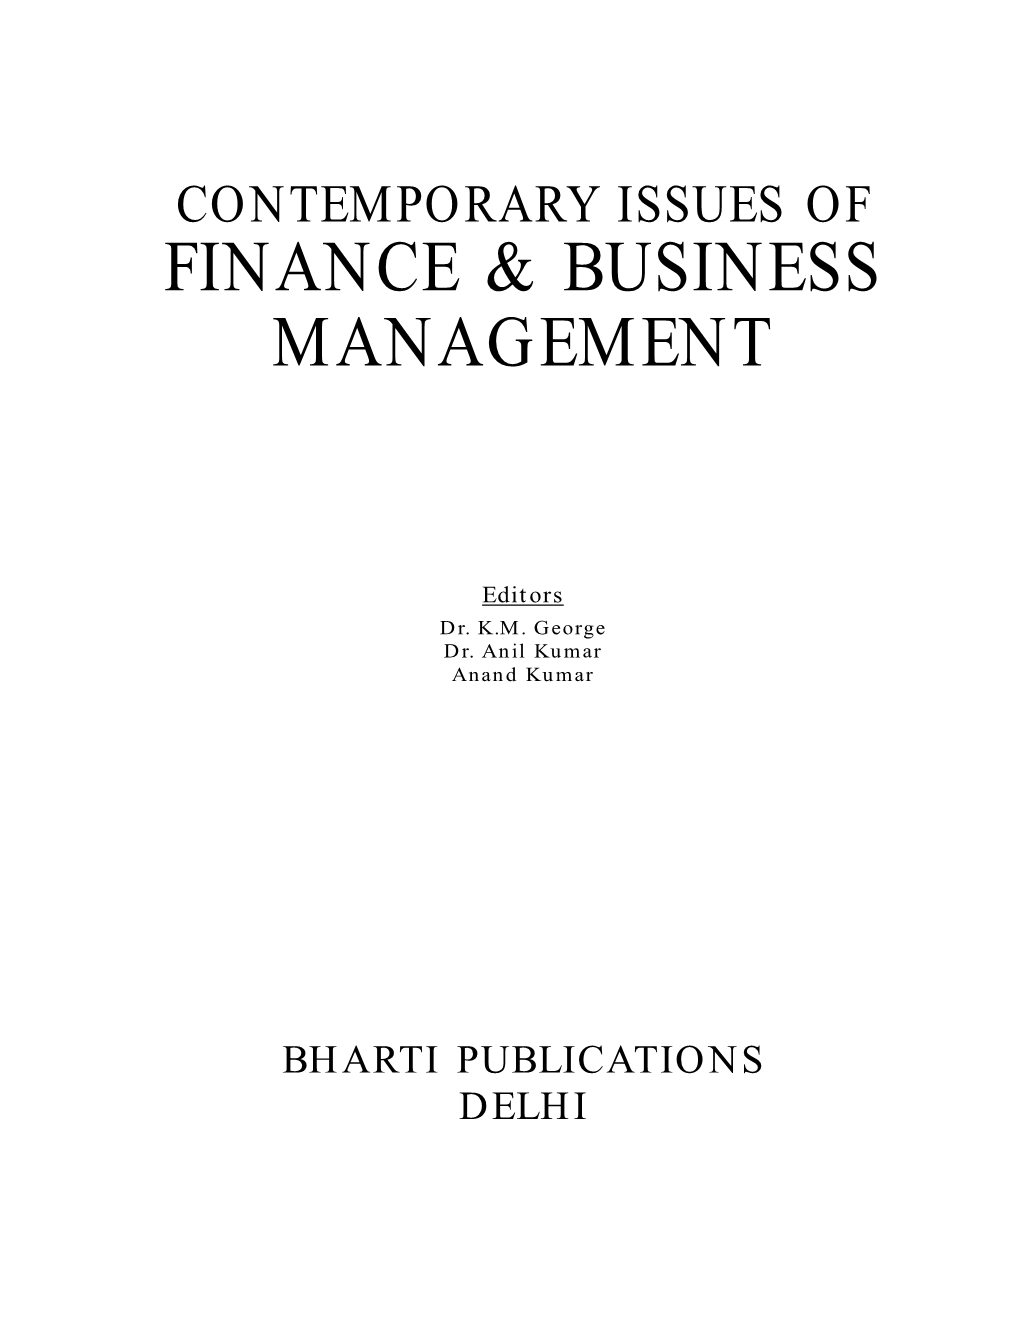 Finance & Business Management